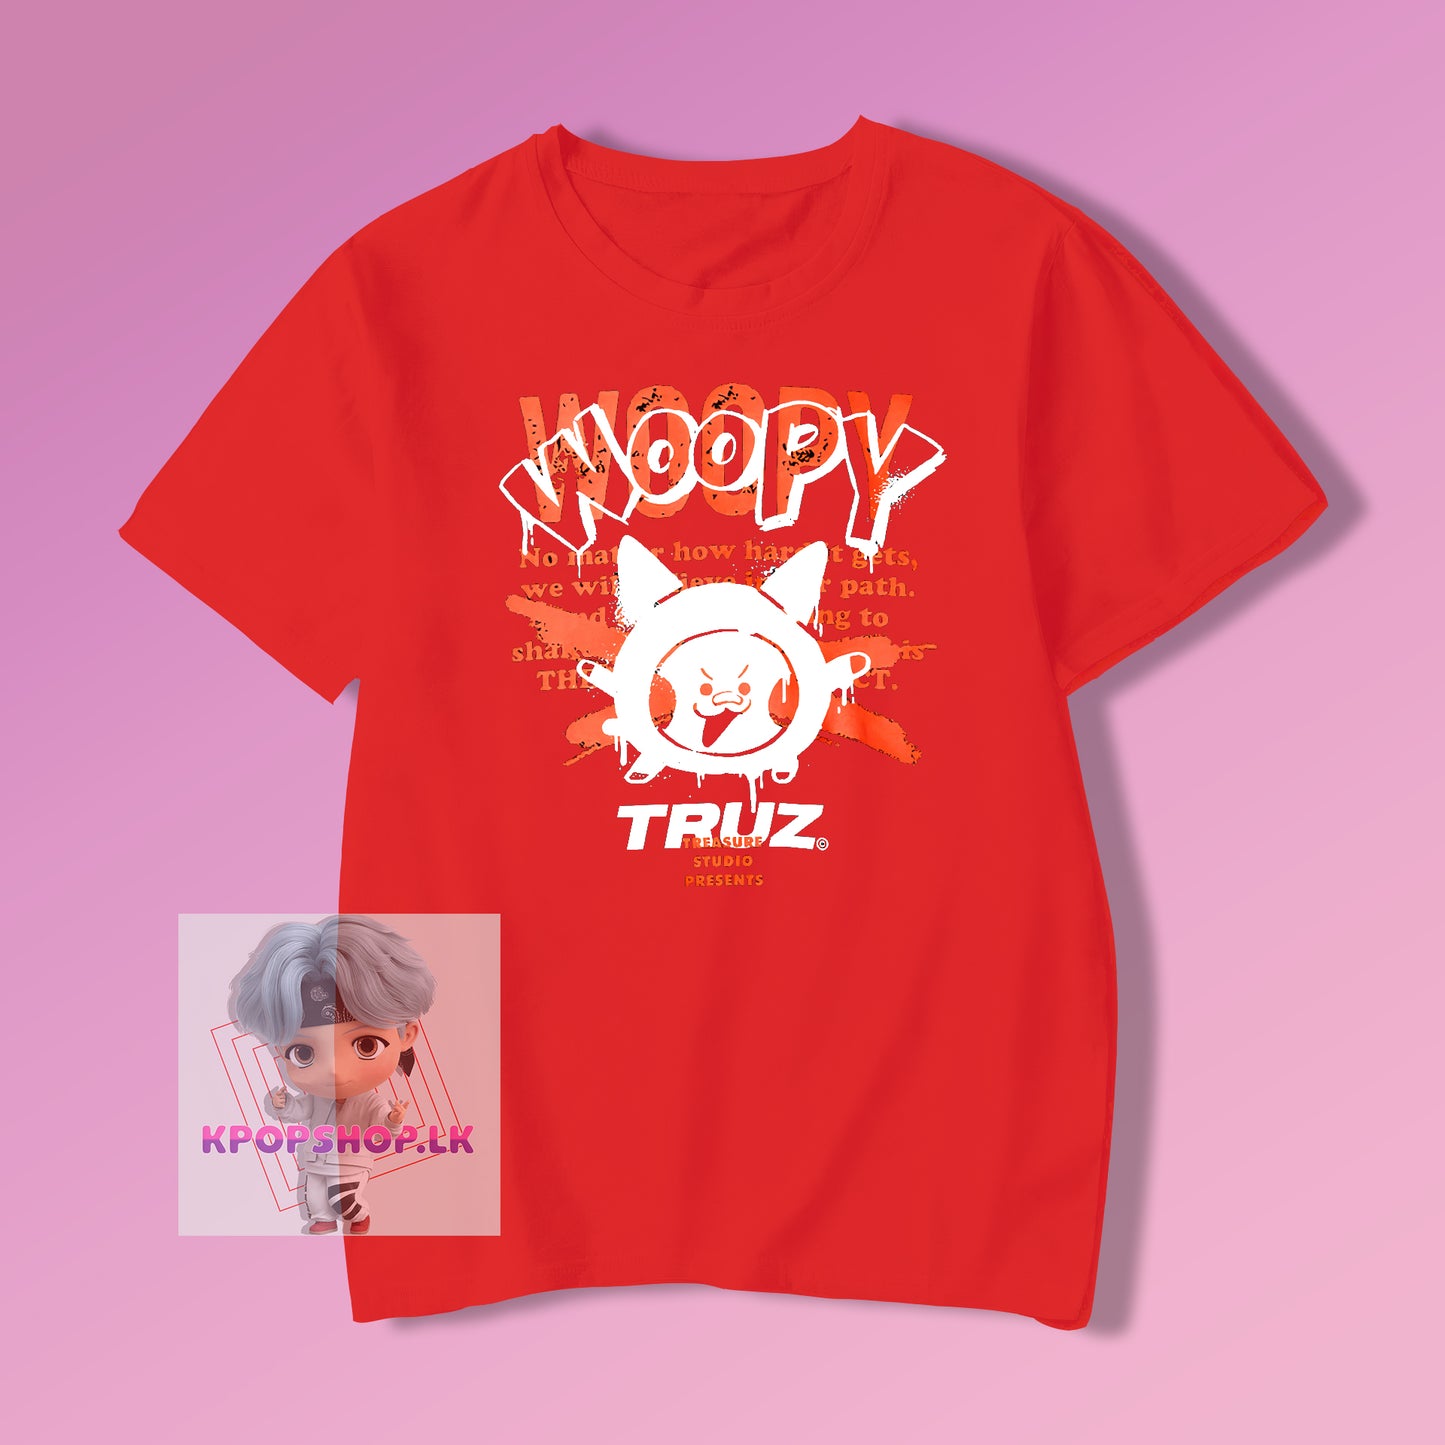 Treasure Woopy Woopy KPOP T-shirt